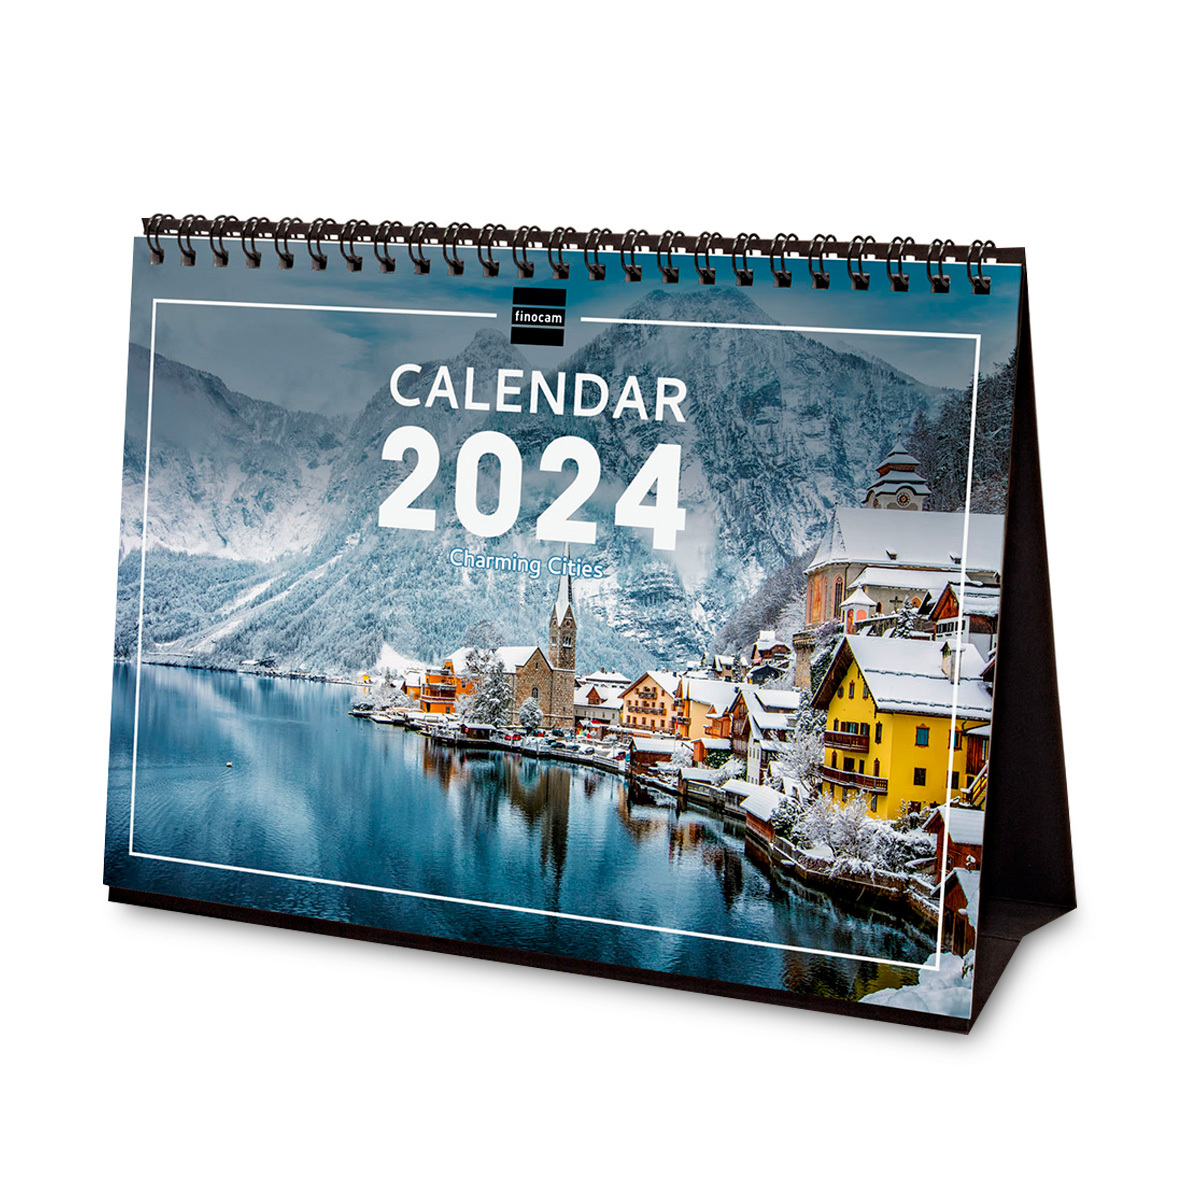 Calendario de Mesa 2024 Finocam Charming Internacional 21 x 15 cm